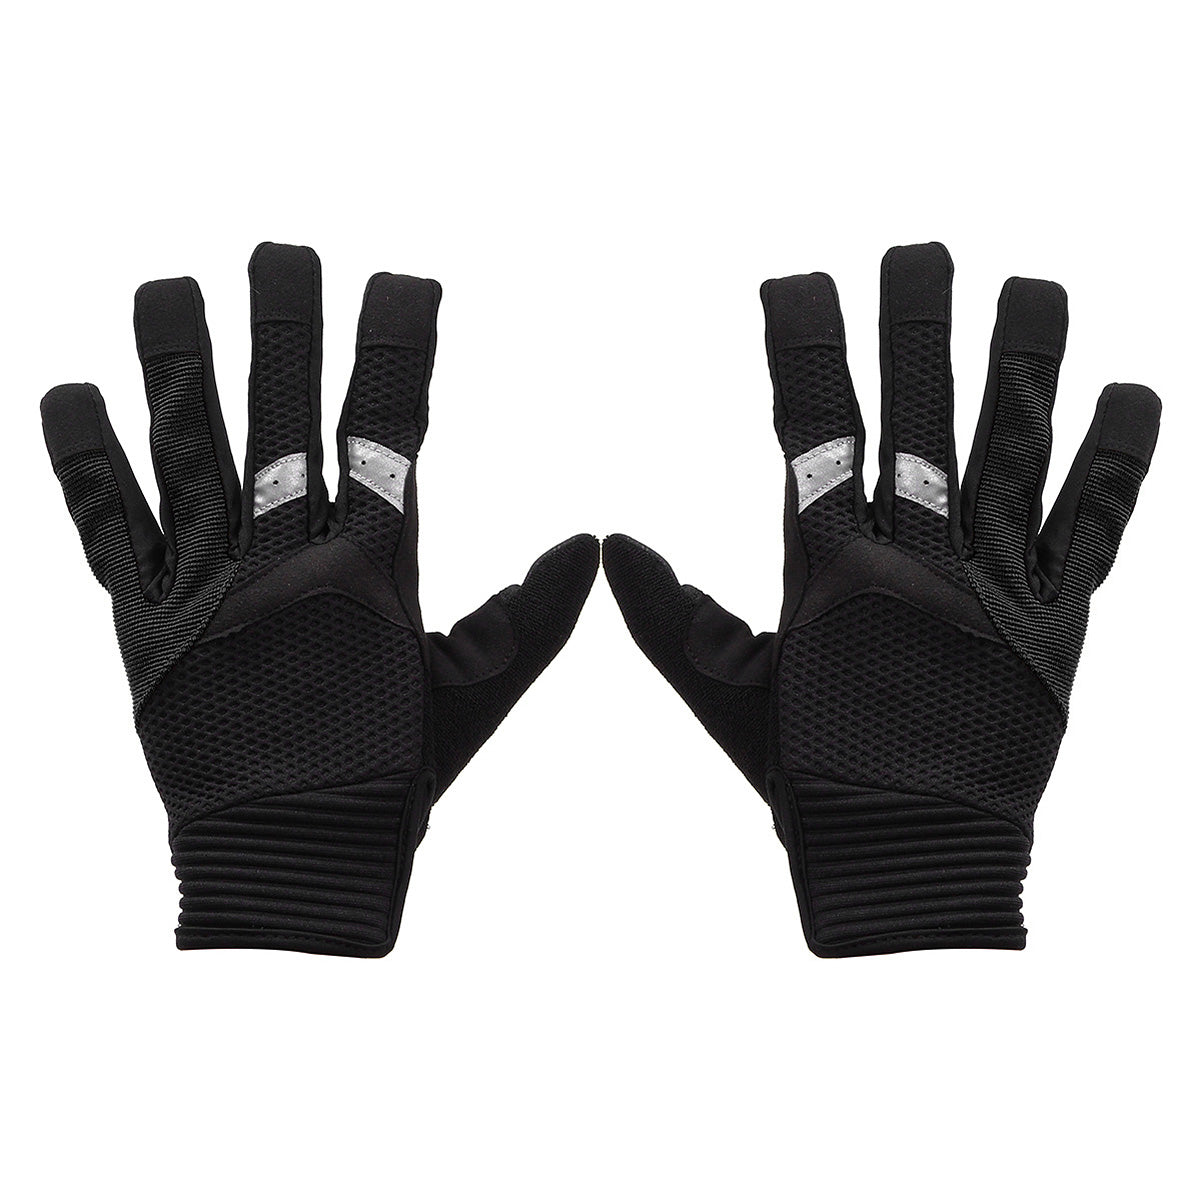 Black SAHOO Winter Cycling Gloves Full Finger Bike Motorcycle Warm Gloves